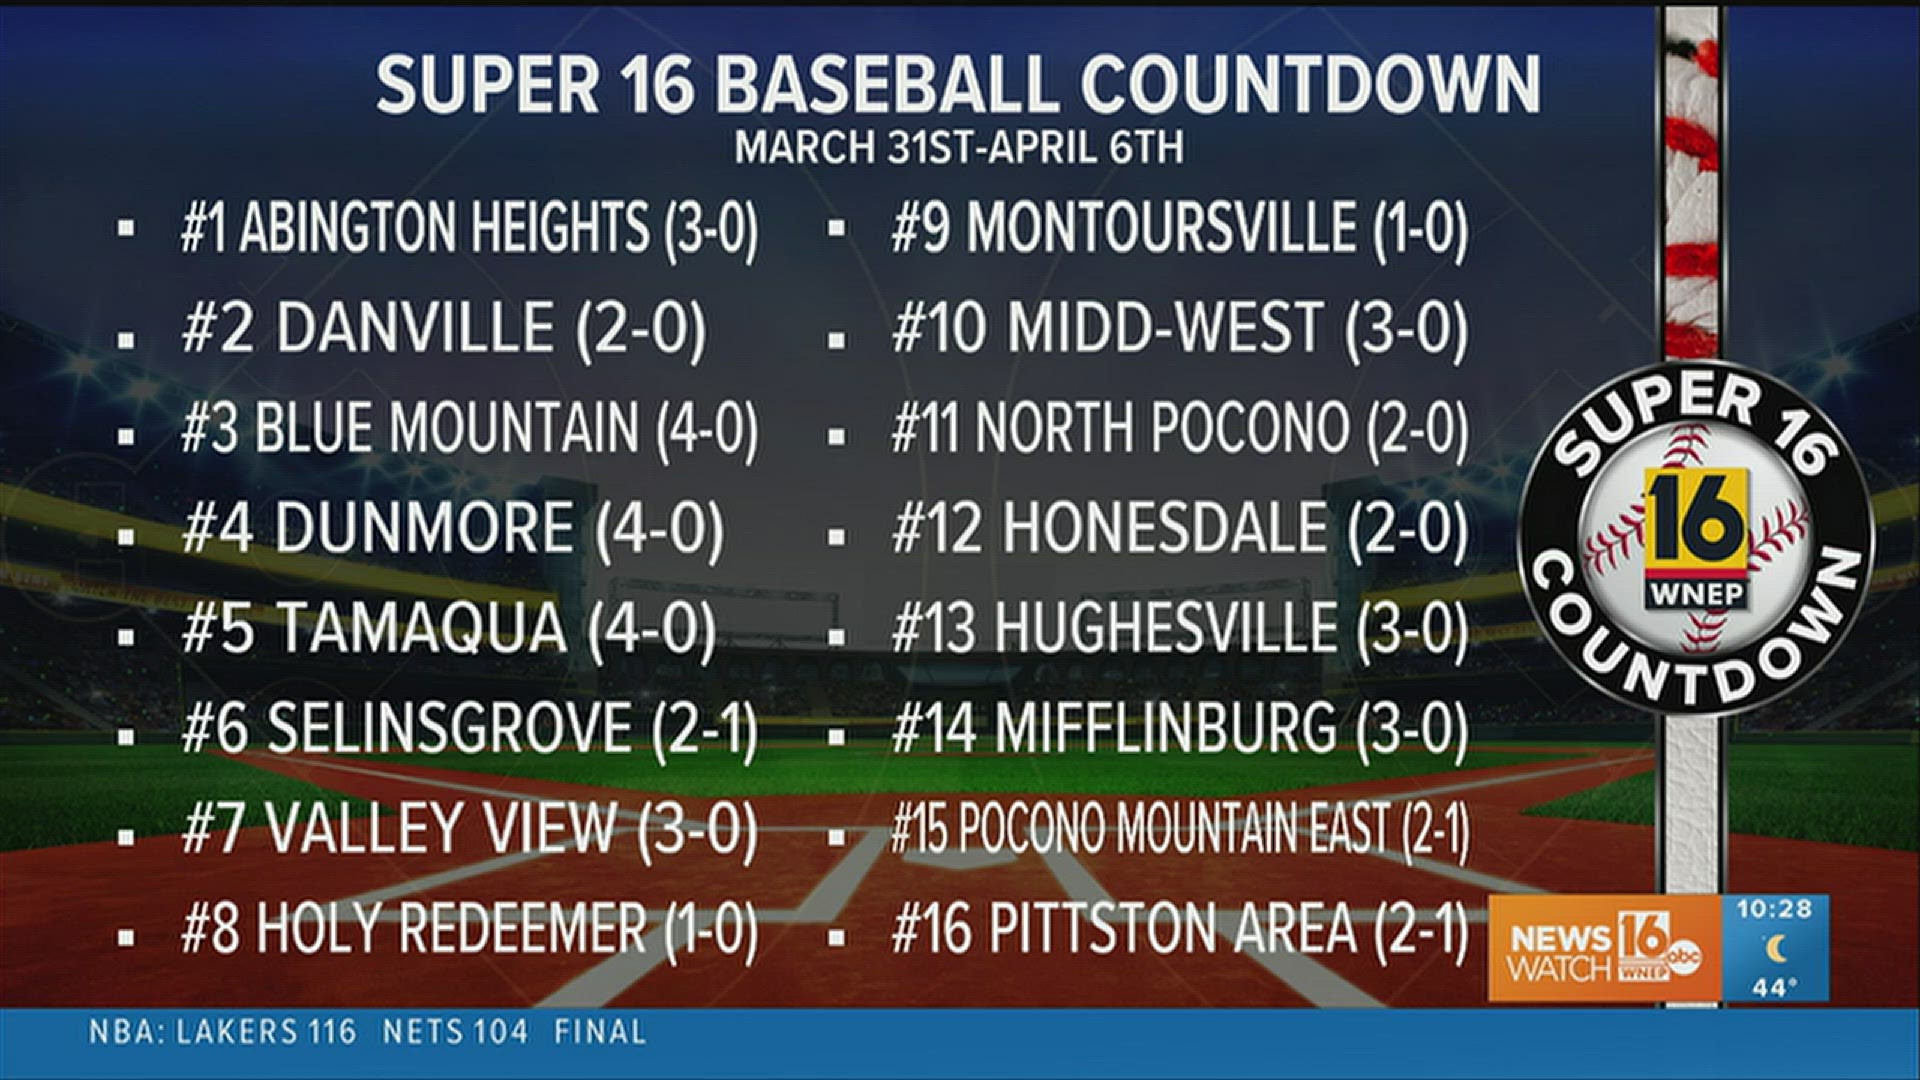 16 baseball teams in the Super 16 Countdown